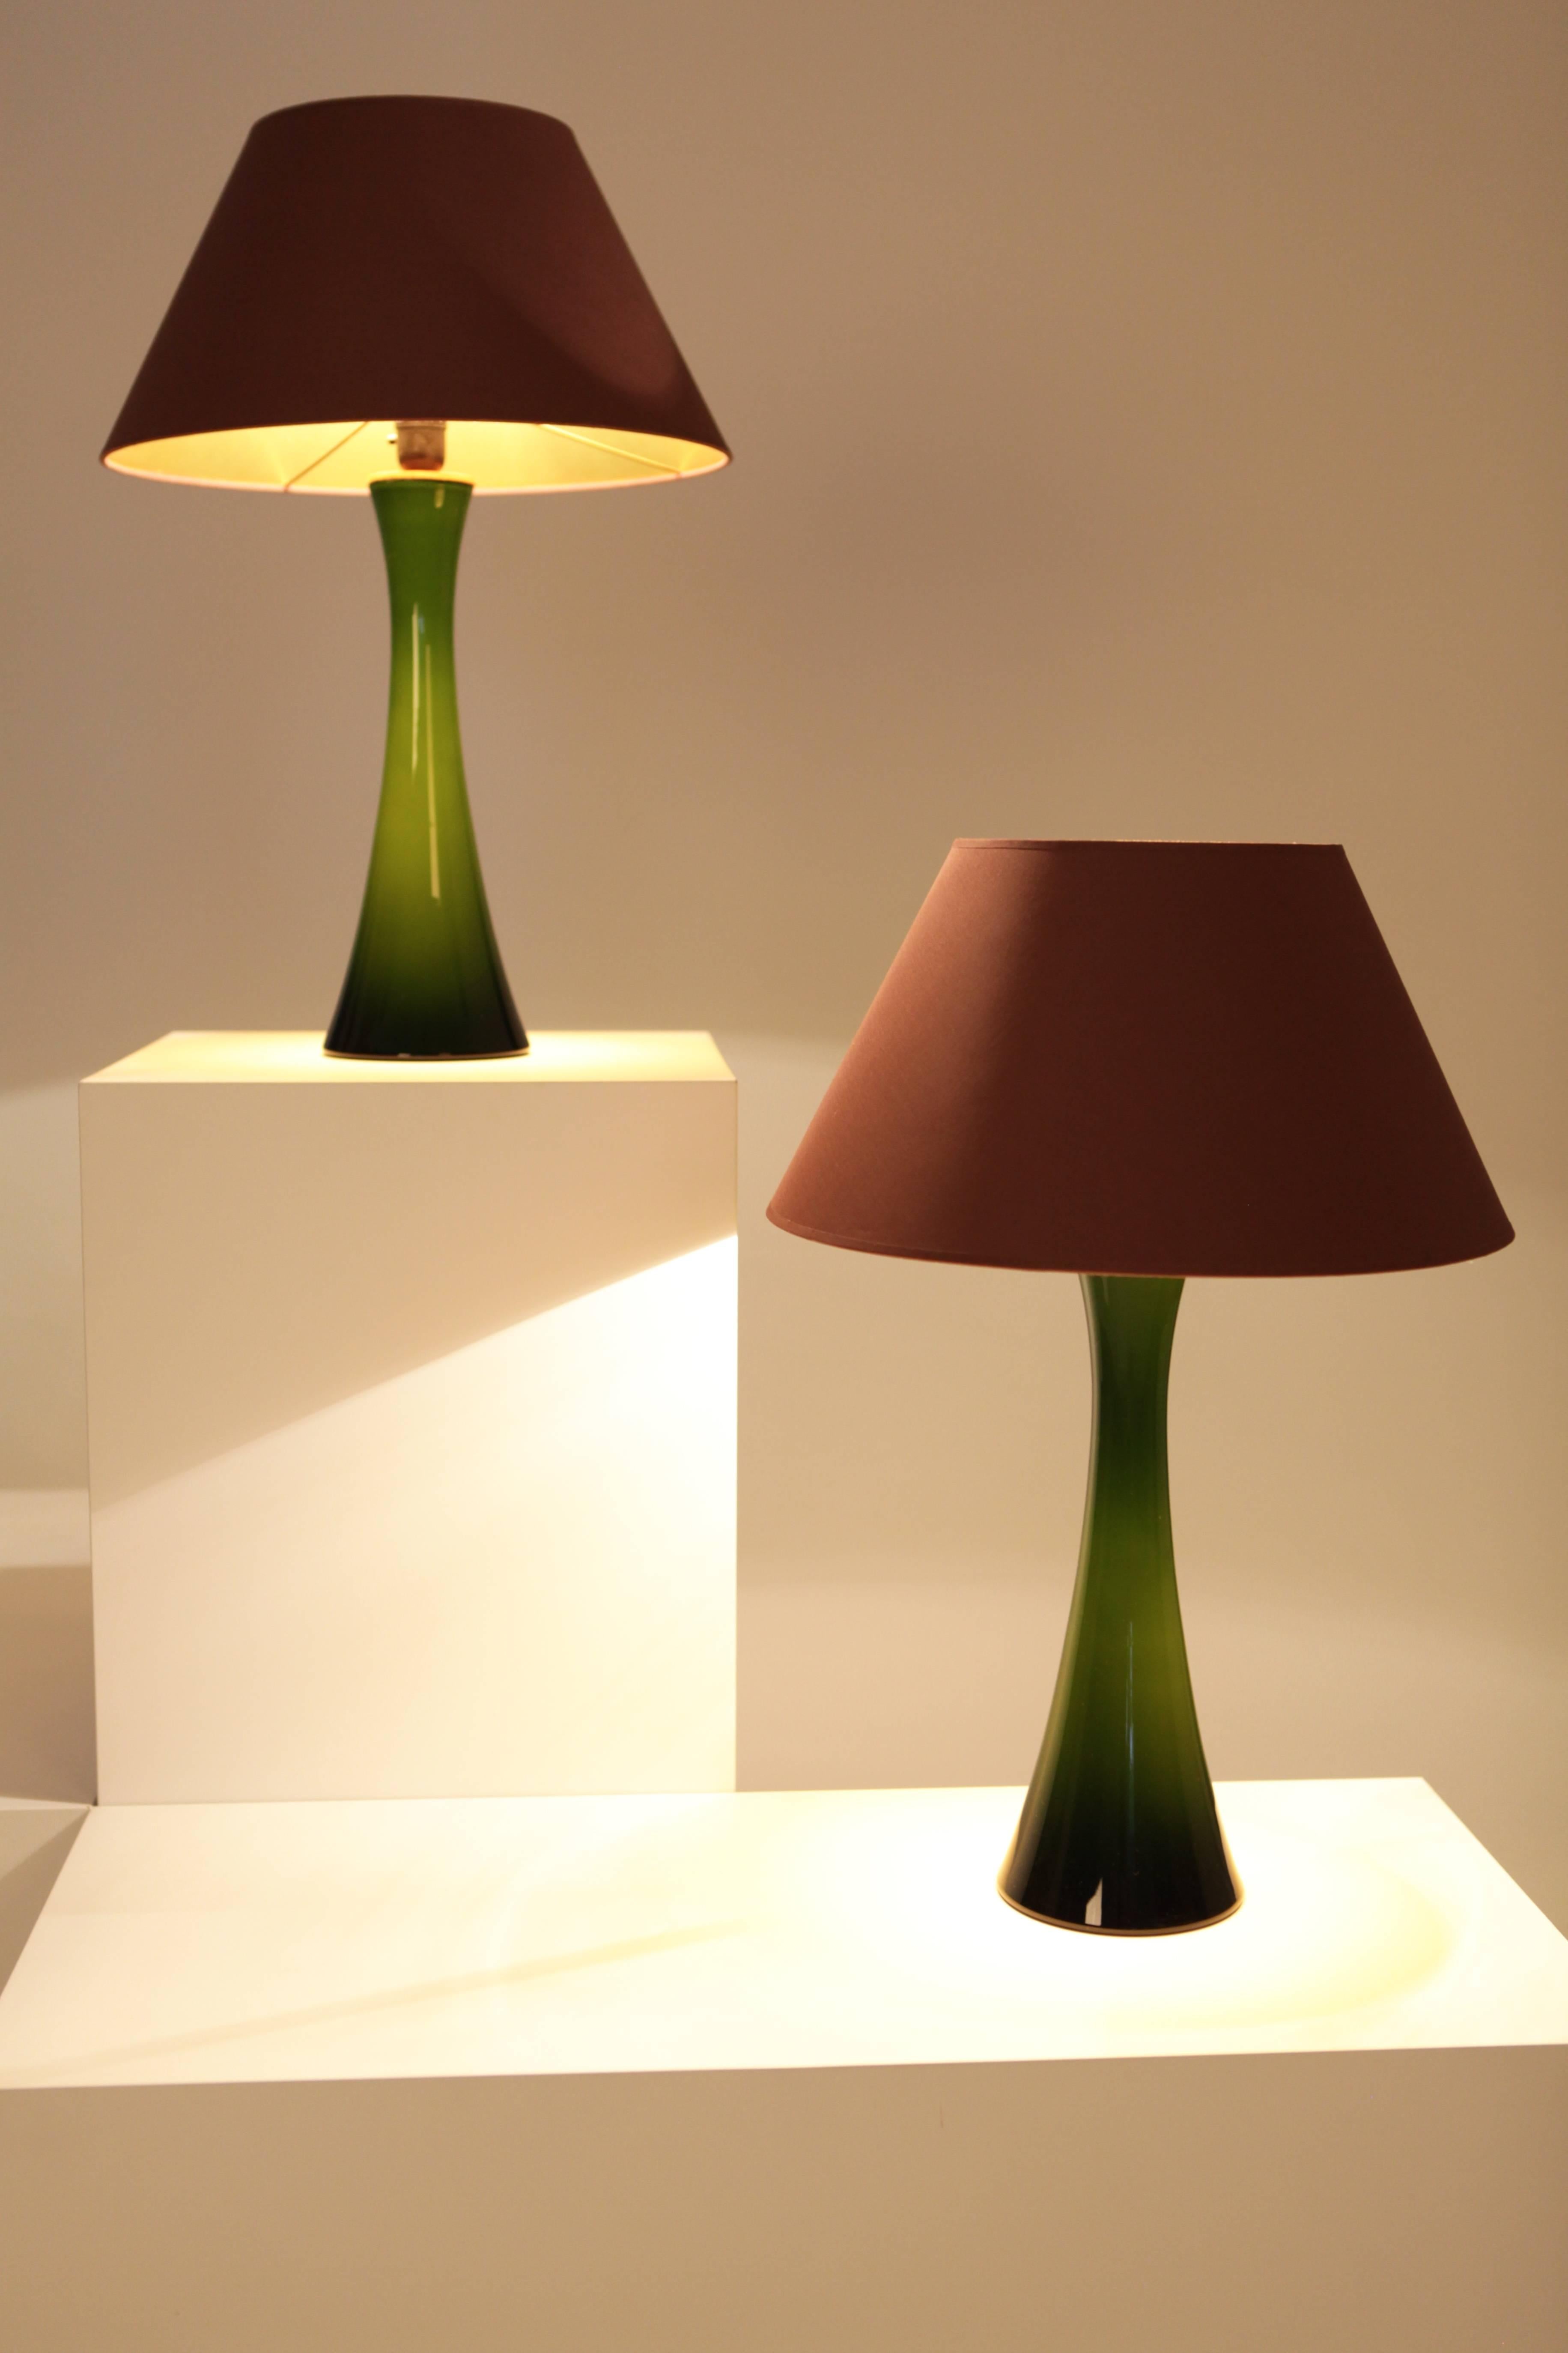 Bergboms table lamps,
designed by Berndt Nordstedt
Green glass and teak.
  